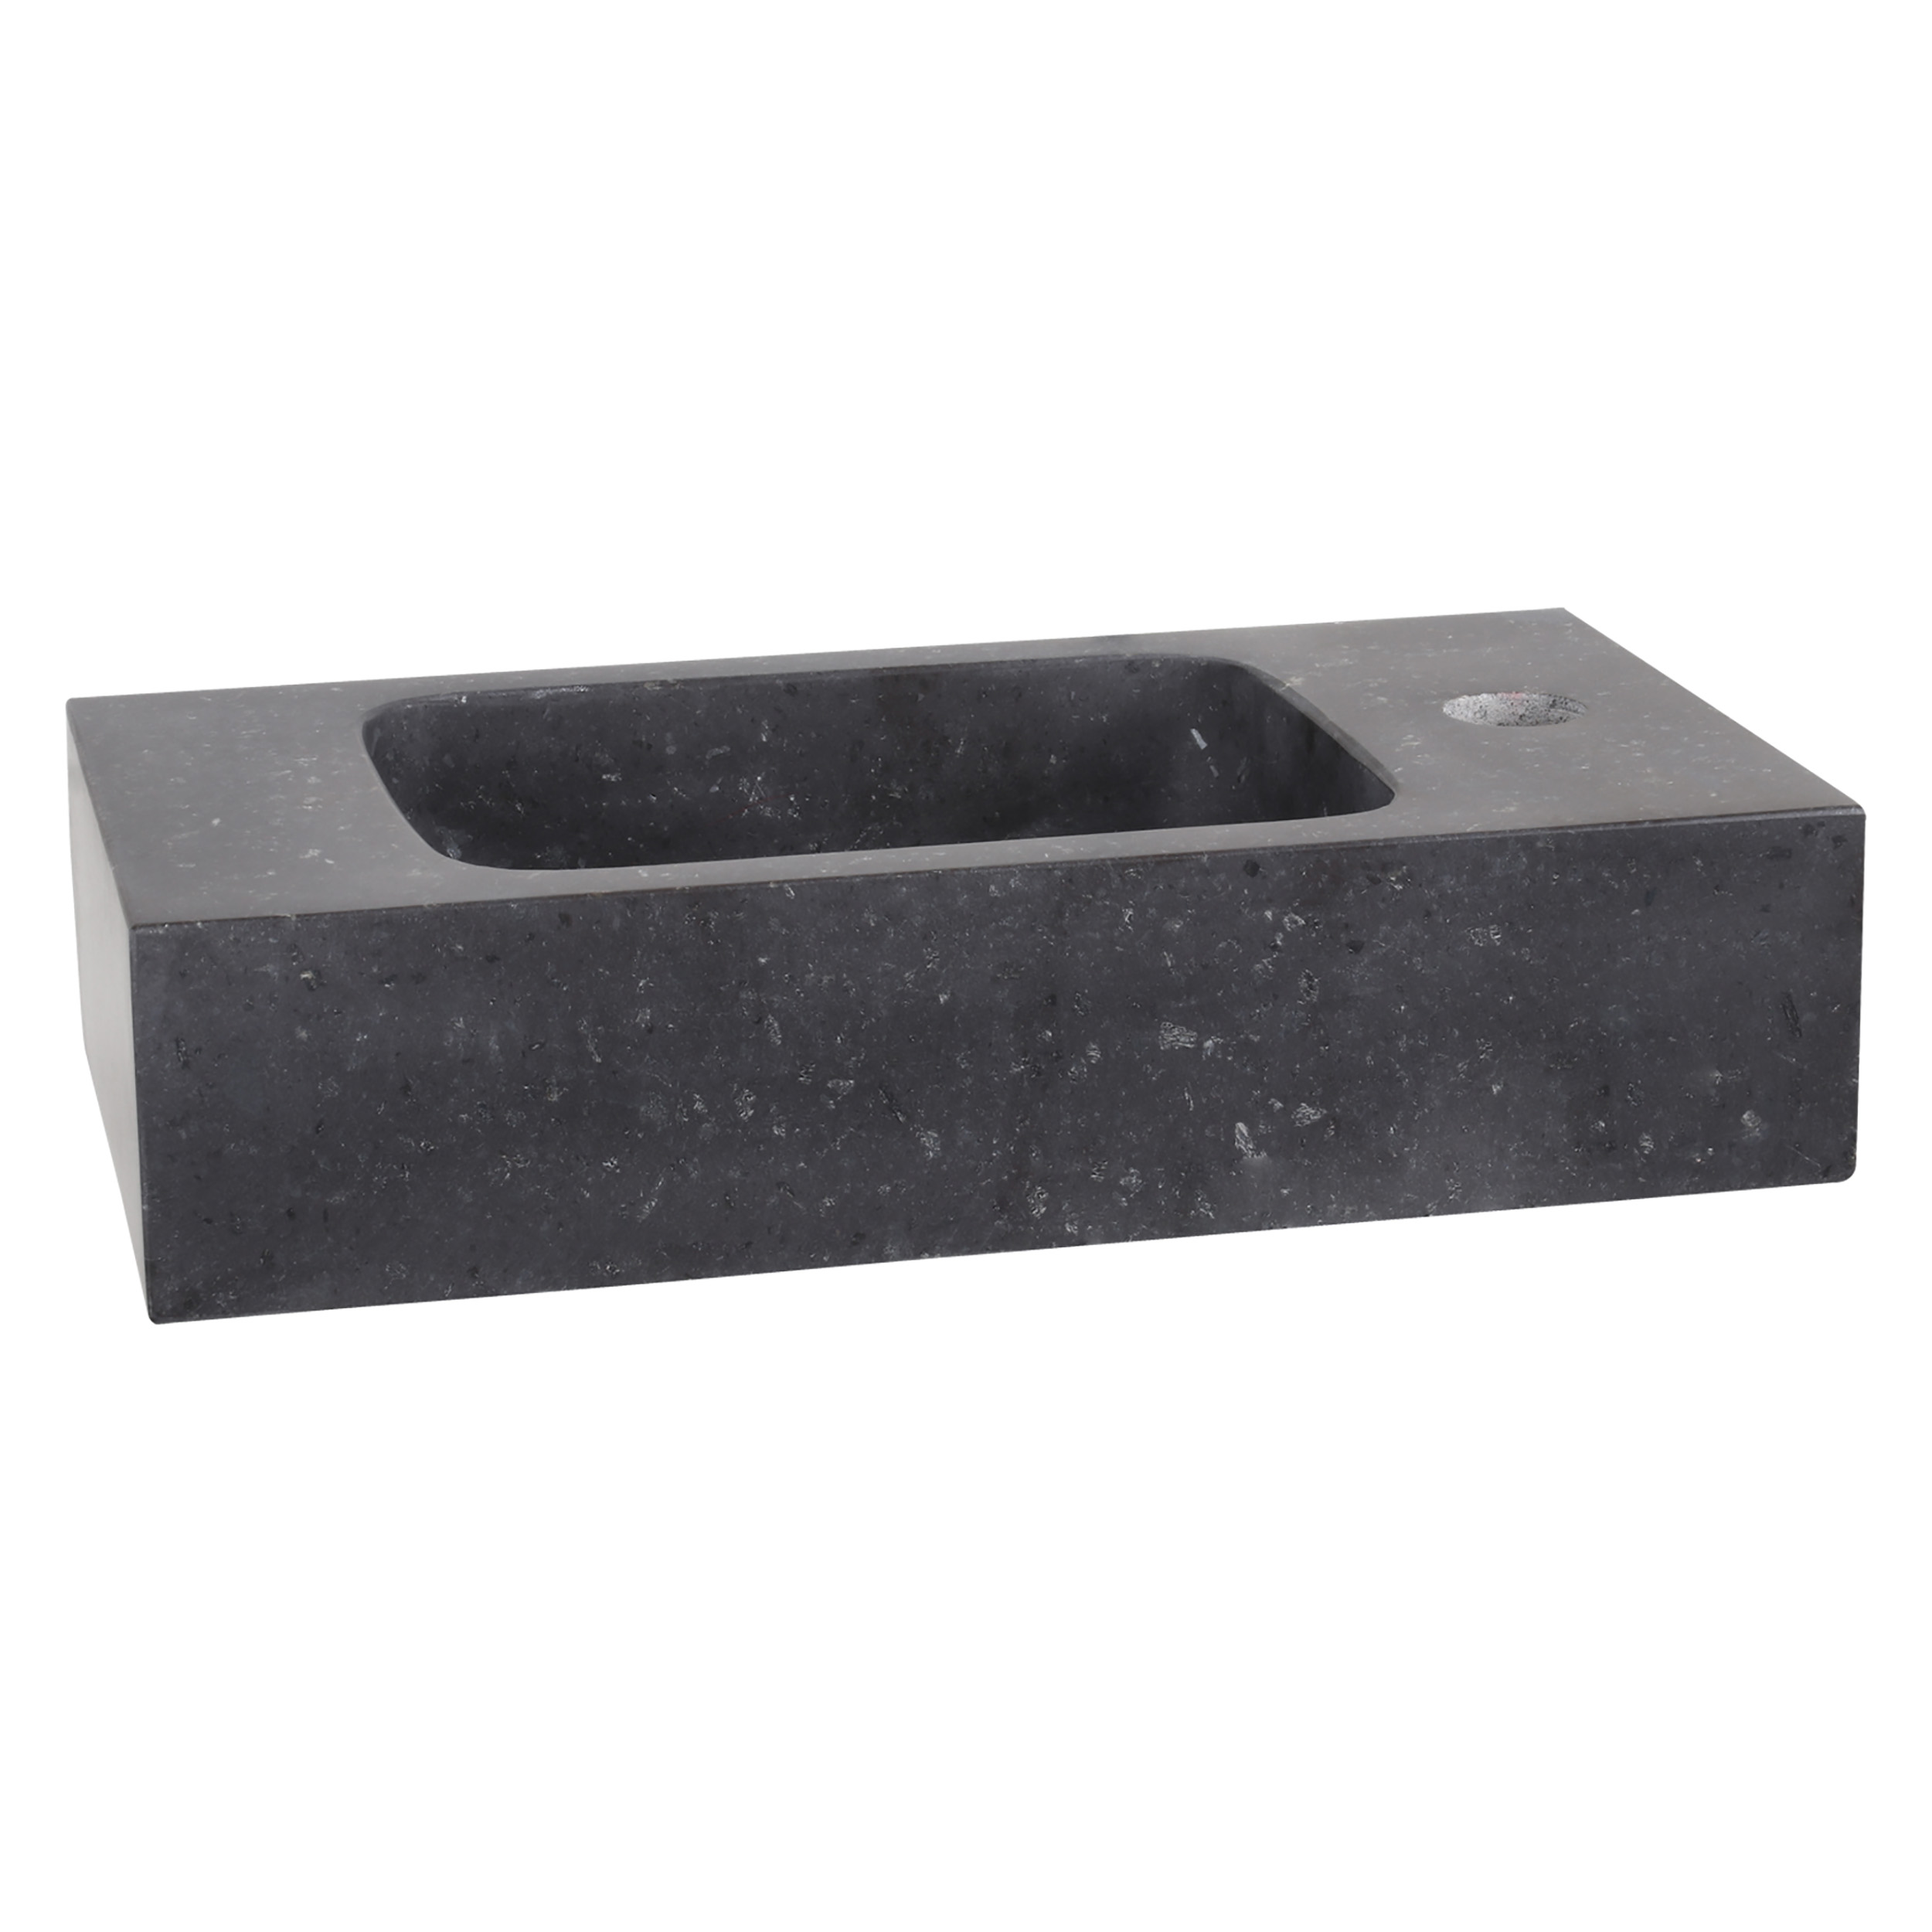 38.005.30 Differnz  fontein bombai black - natuursteen - 40 x 22 x 9 cm